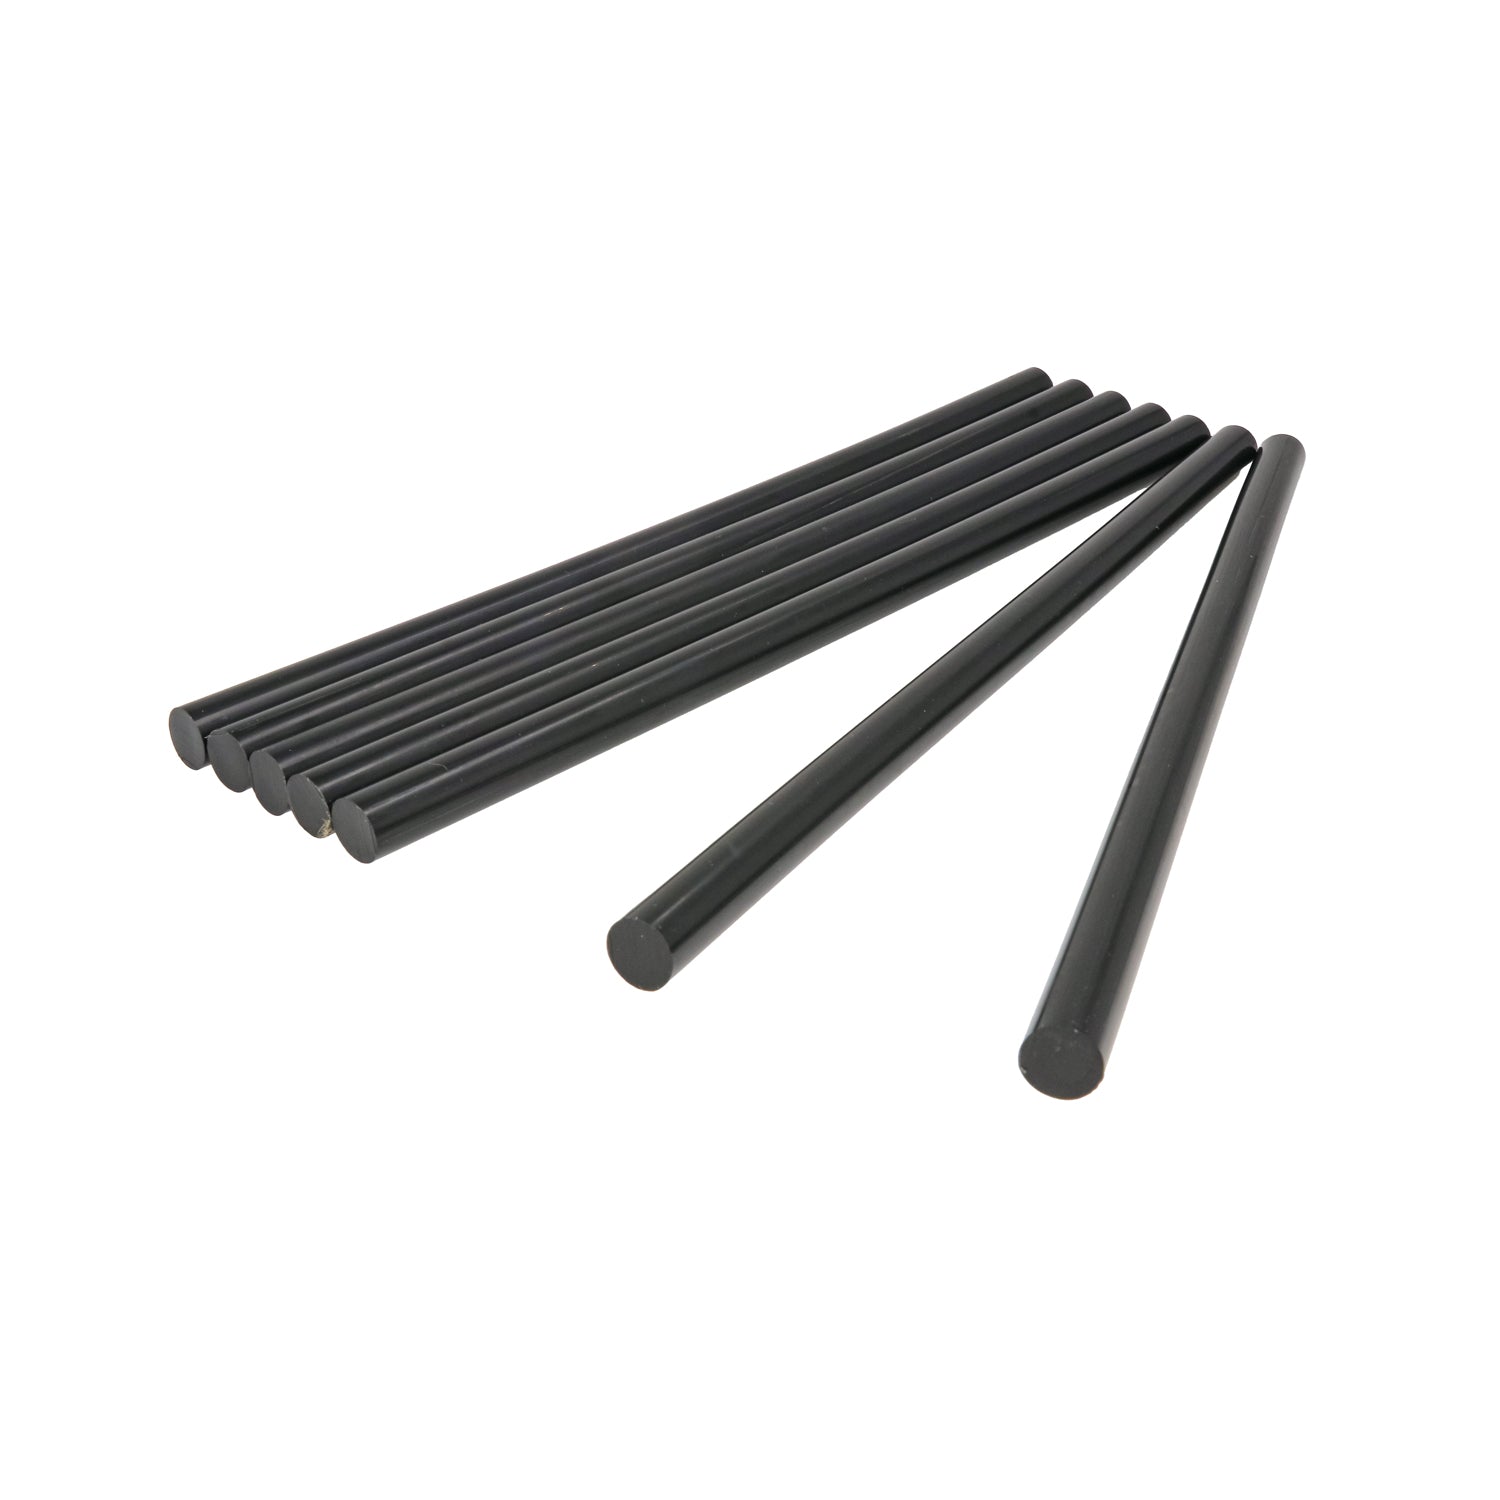 Black Hot Glue Sticks Mini Size - 4 - 12 Pack – Surebonder